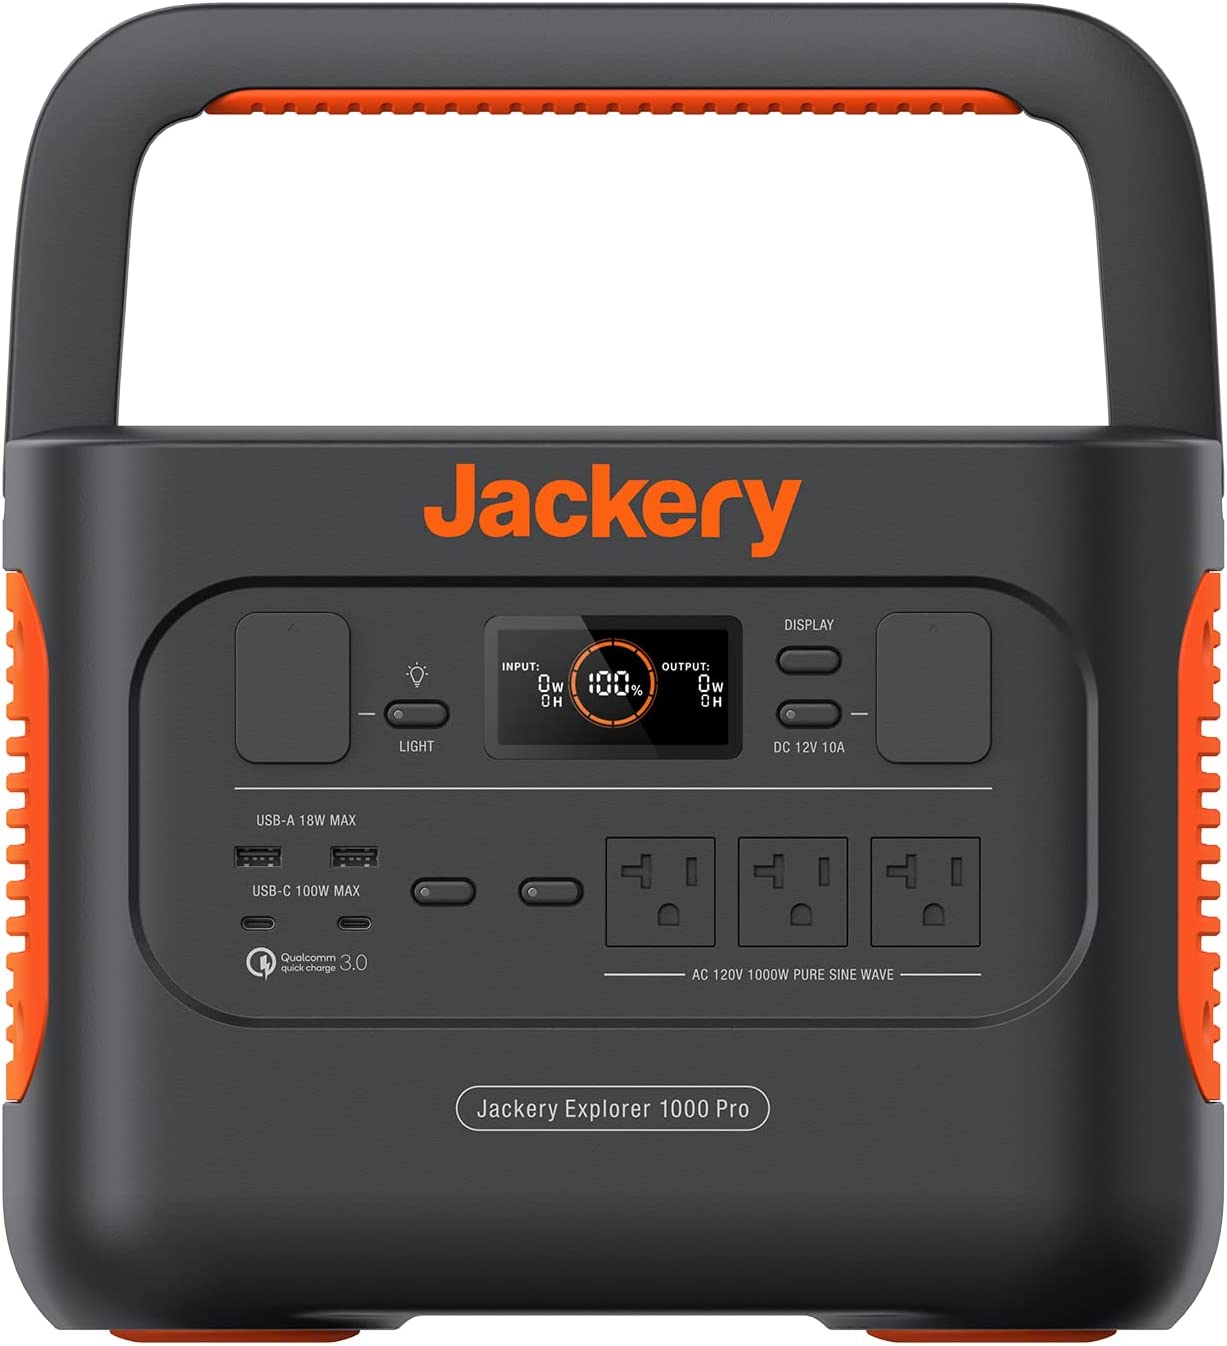 Jackery explorer 1000 pro portable power station.